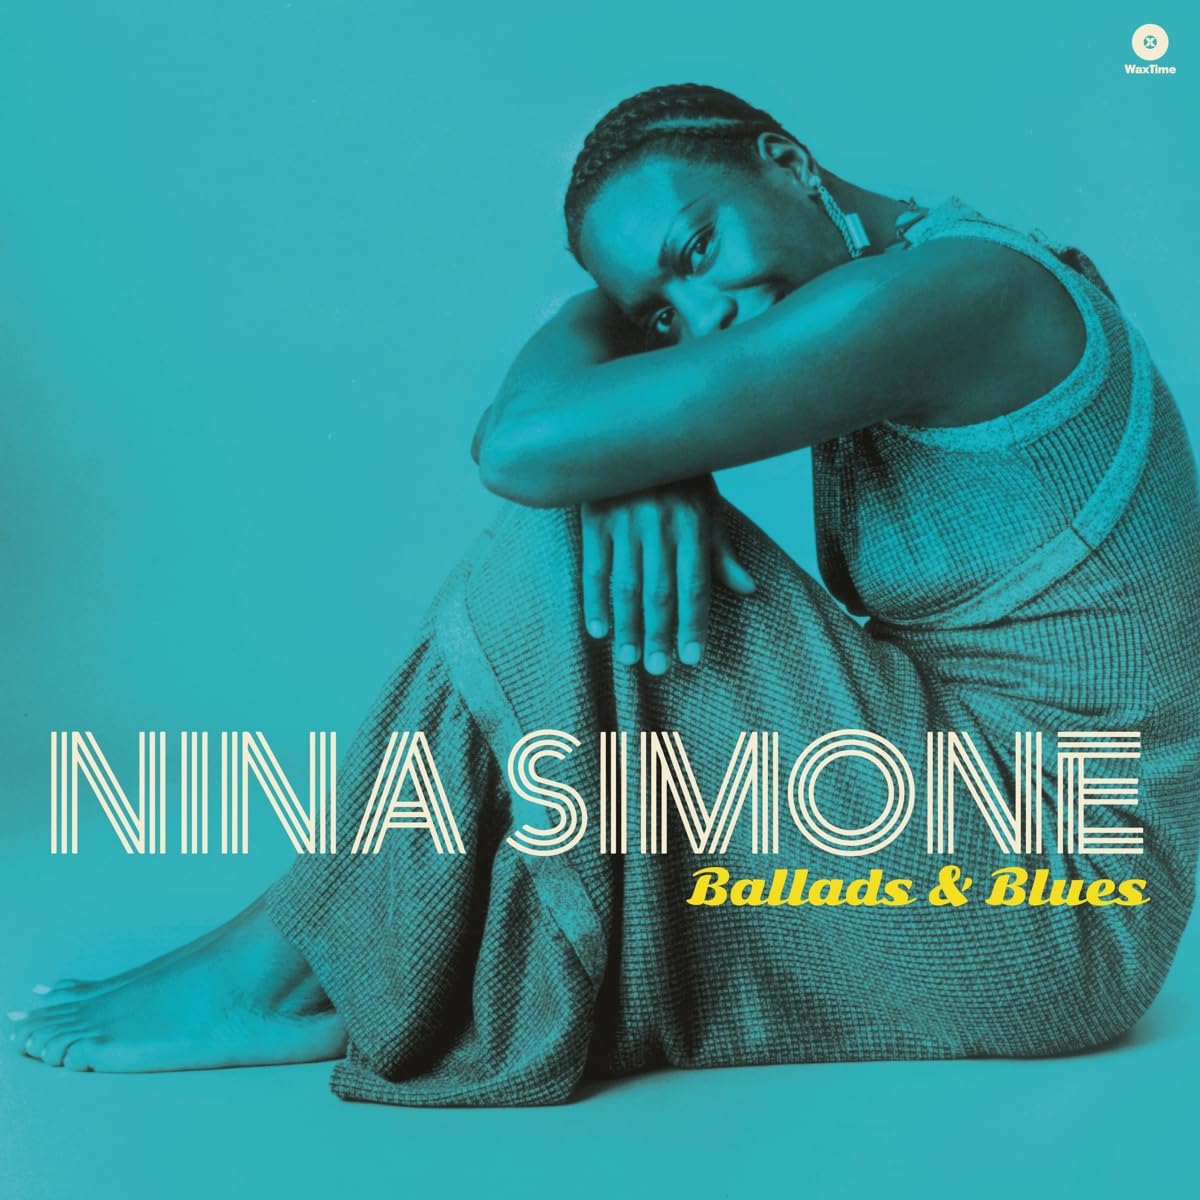 Nina Simone "Ballads & Blues" LP